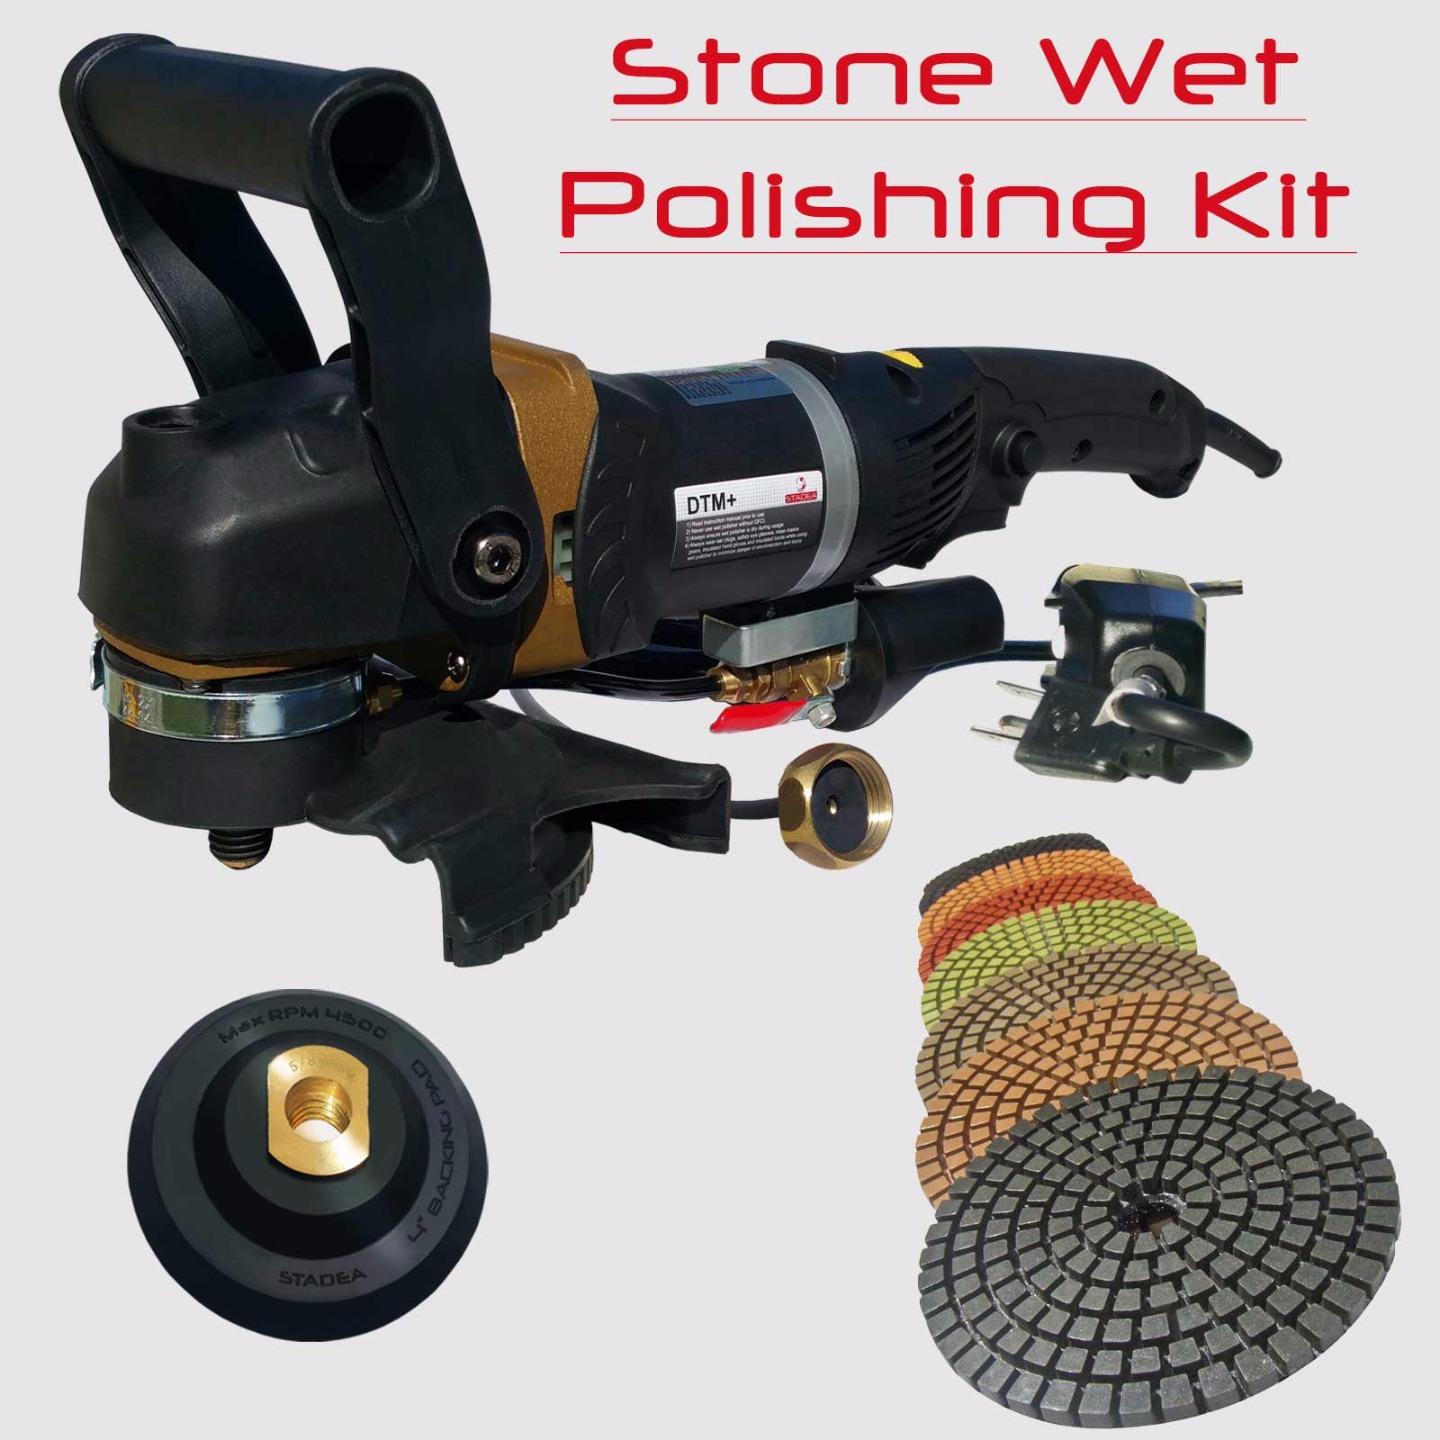 Stadea Concrete Countertop Grinder Polisher Wet Kit For Stone